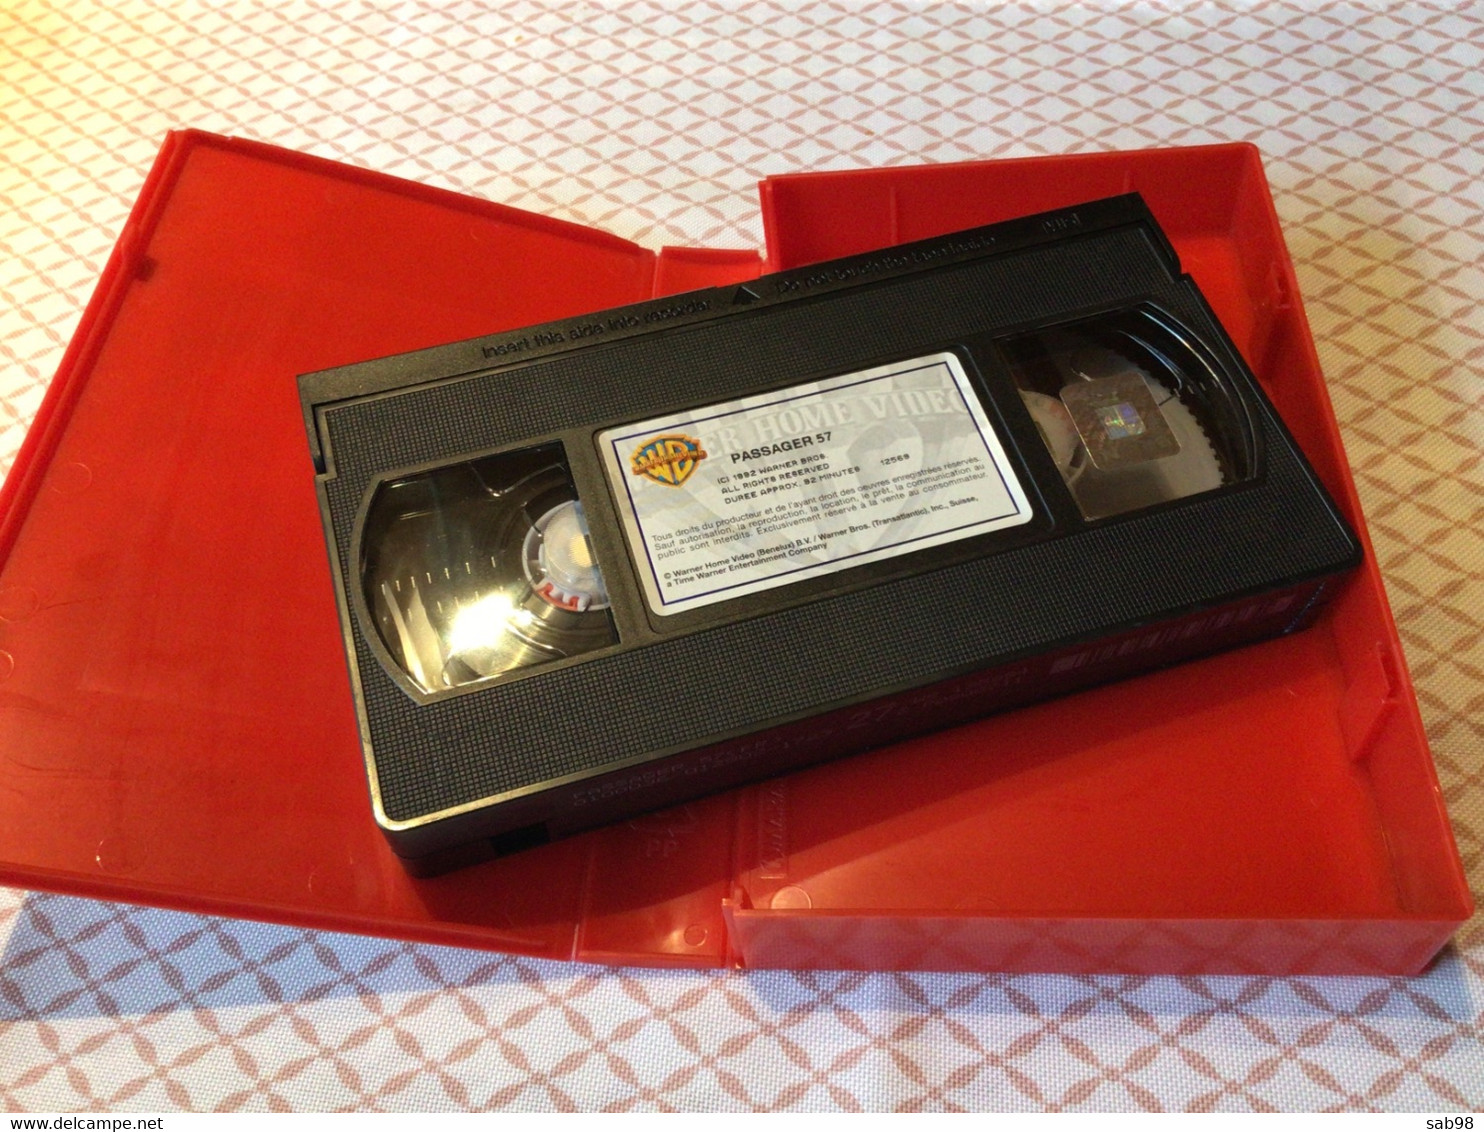 Passager 57 Wesley Snipe VHS Originale Action Collection De 1995  Warner Bros - Action & Abenteuer